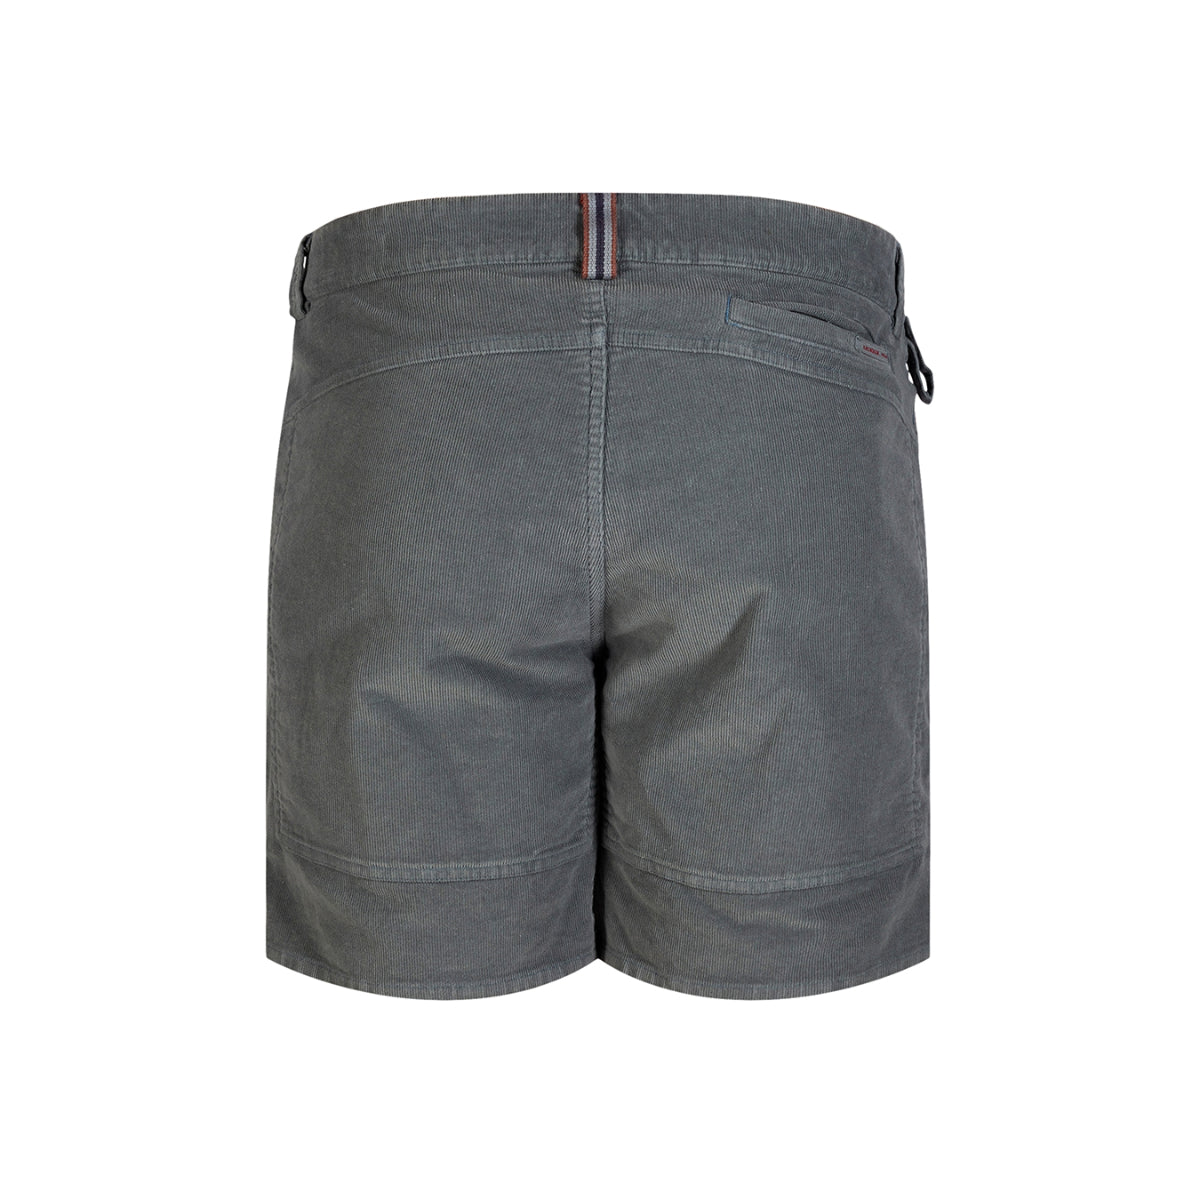 Amundsen Sports - Men's 7 Incher Concord Garment Dyed Shorts - Stormy Blue